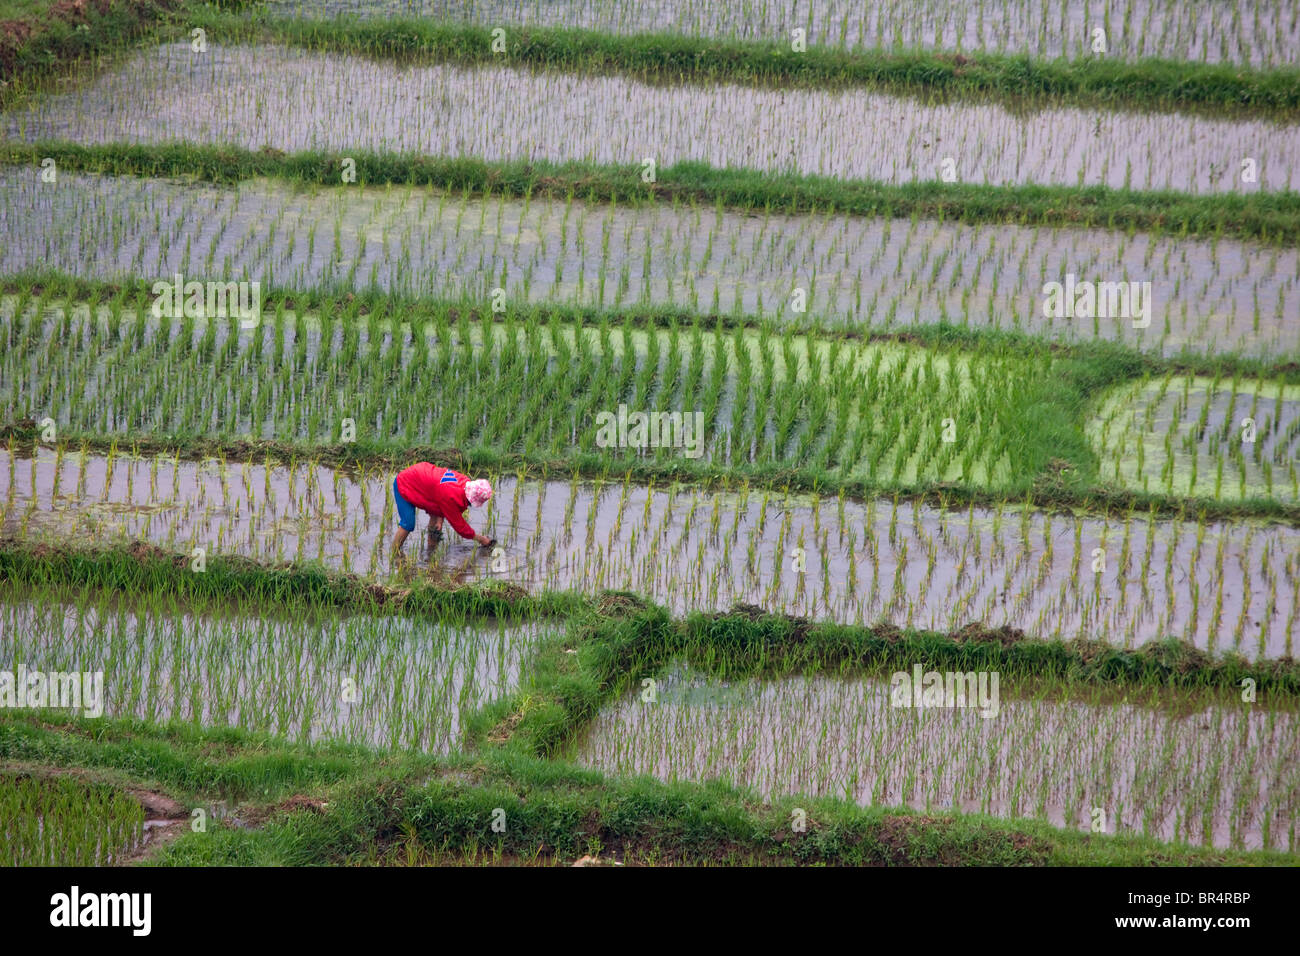 Landwirt Pflanzen Reis Sämlinge in den Reis Paddy, Nord Yunnan, China Stockfoto